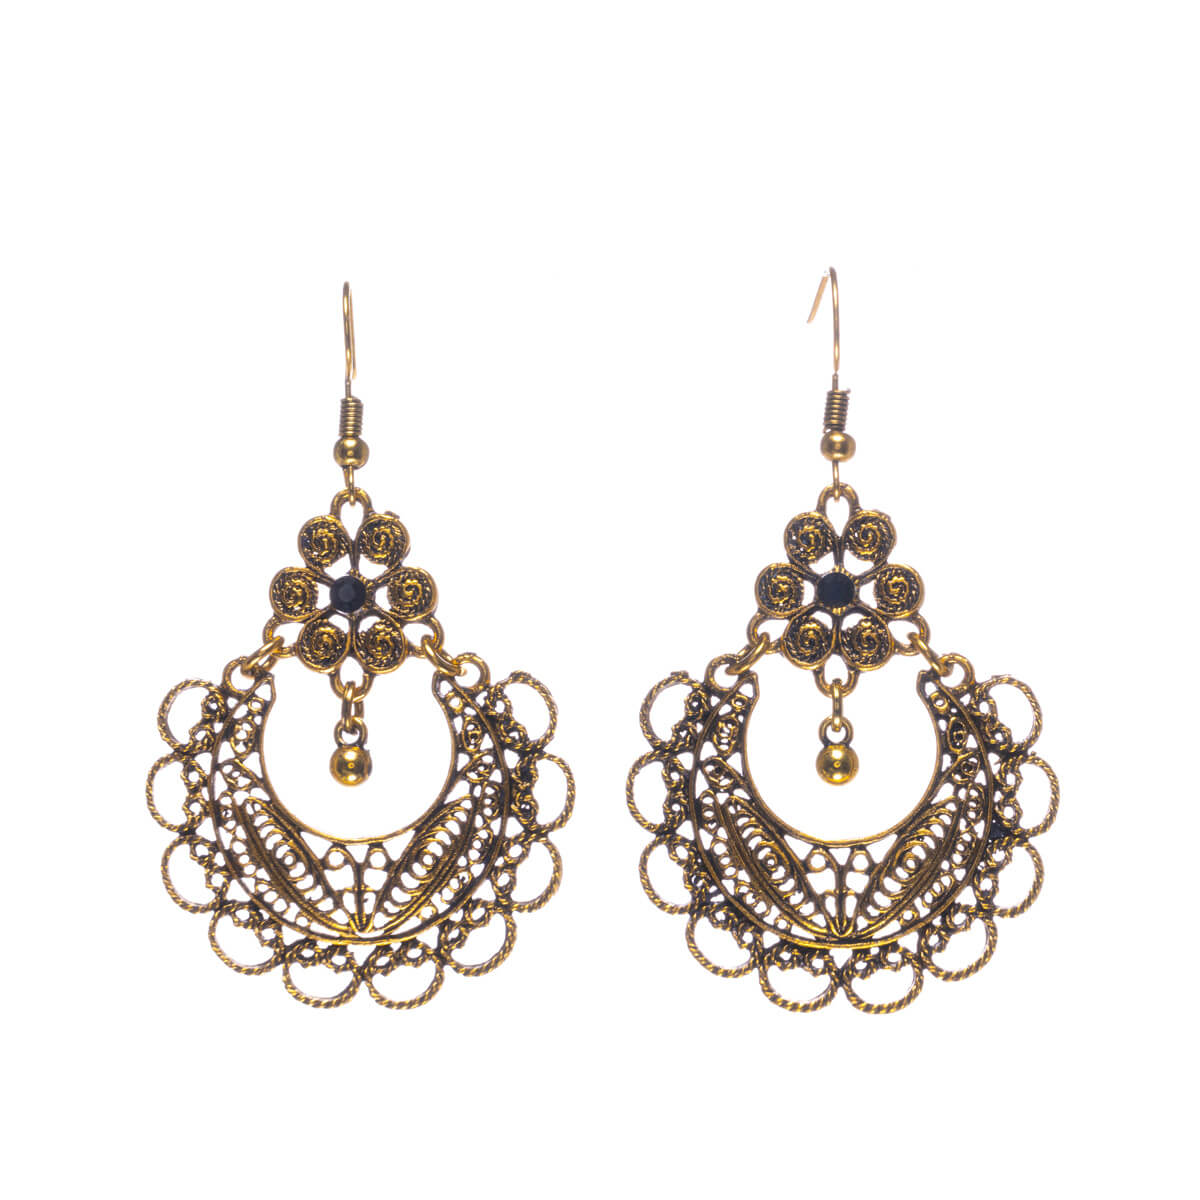 Round decorative flower earrings